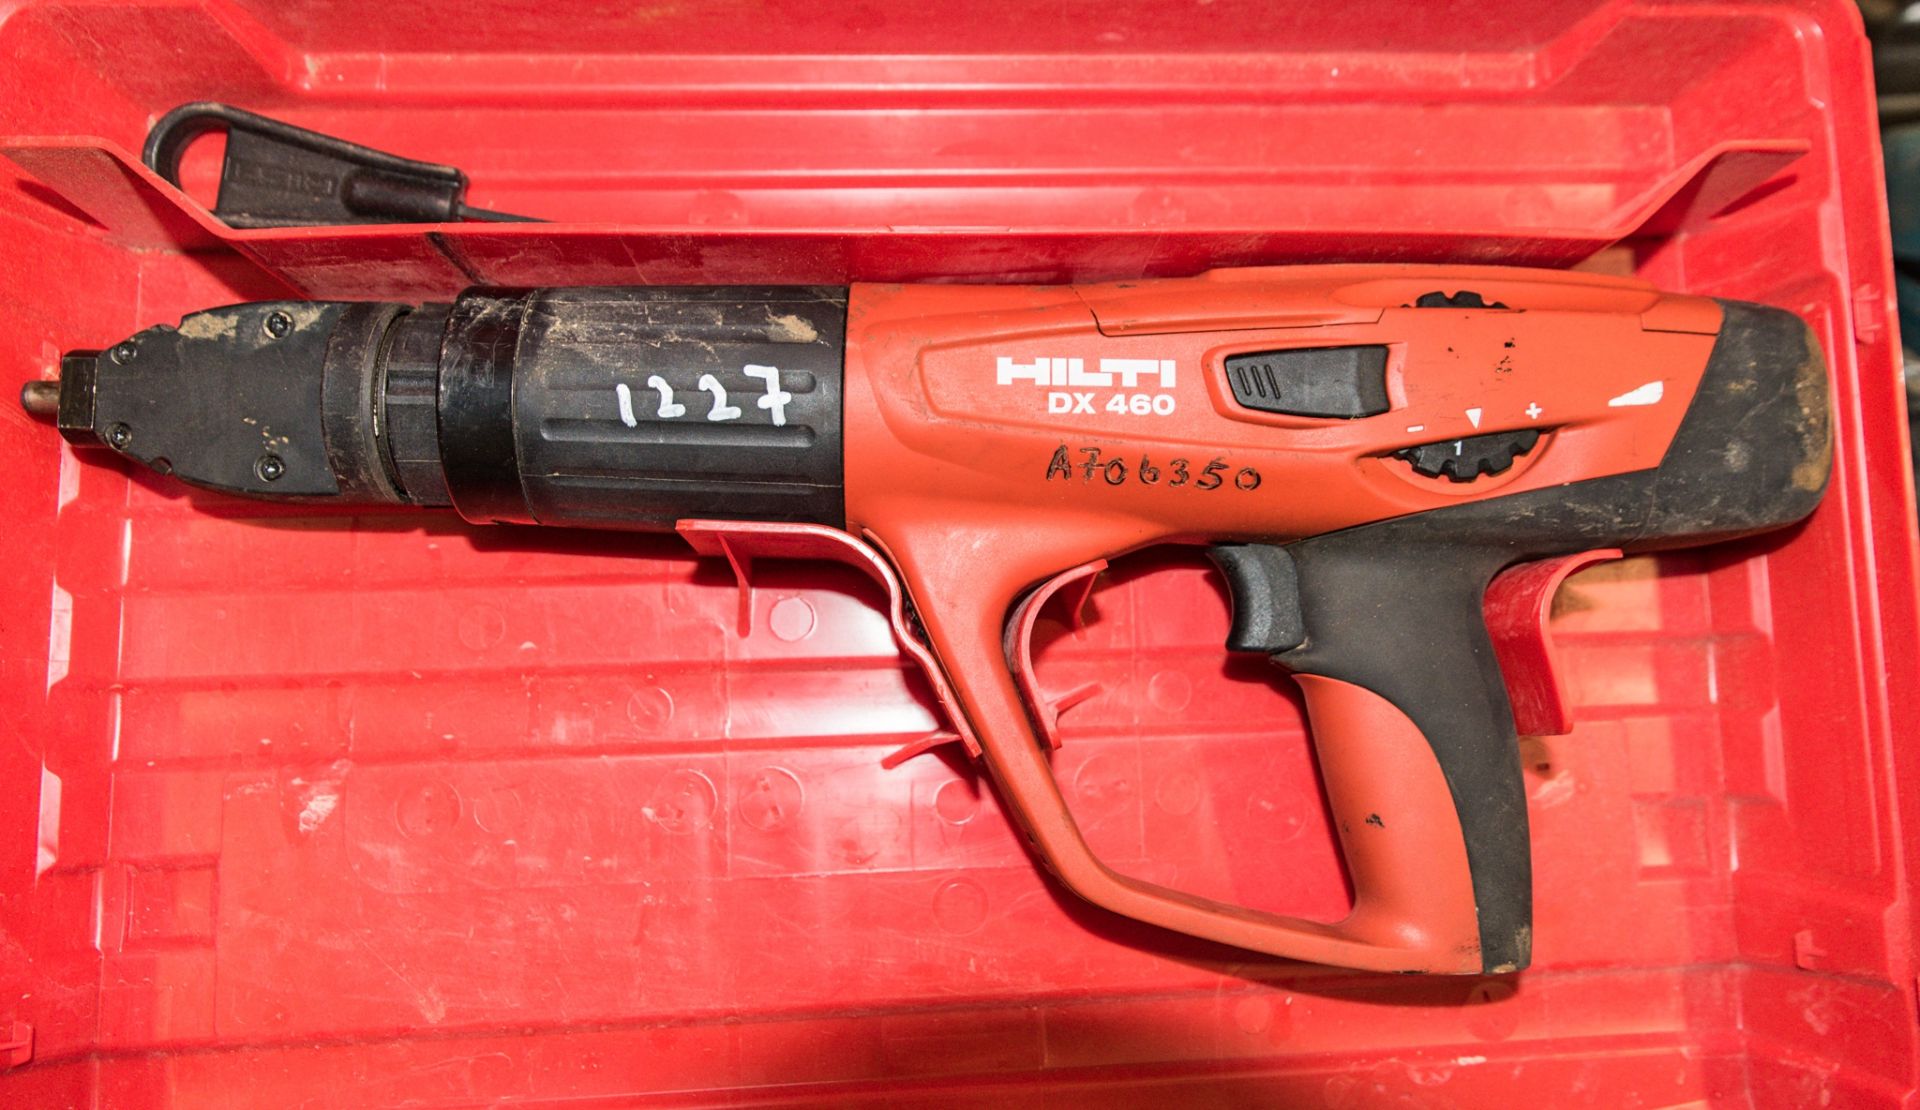 Hilti DX460 nail gun c/w carry case A706350